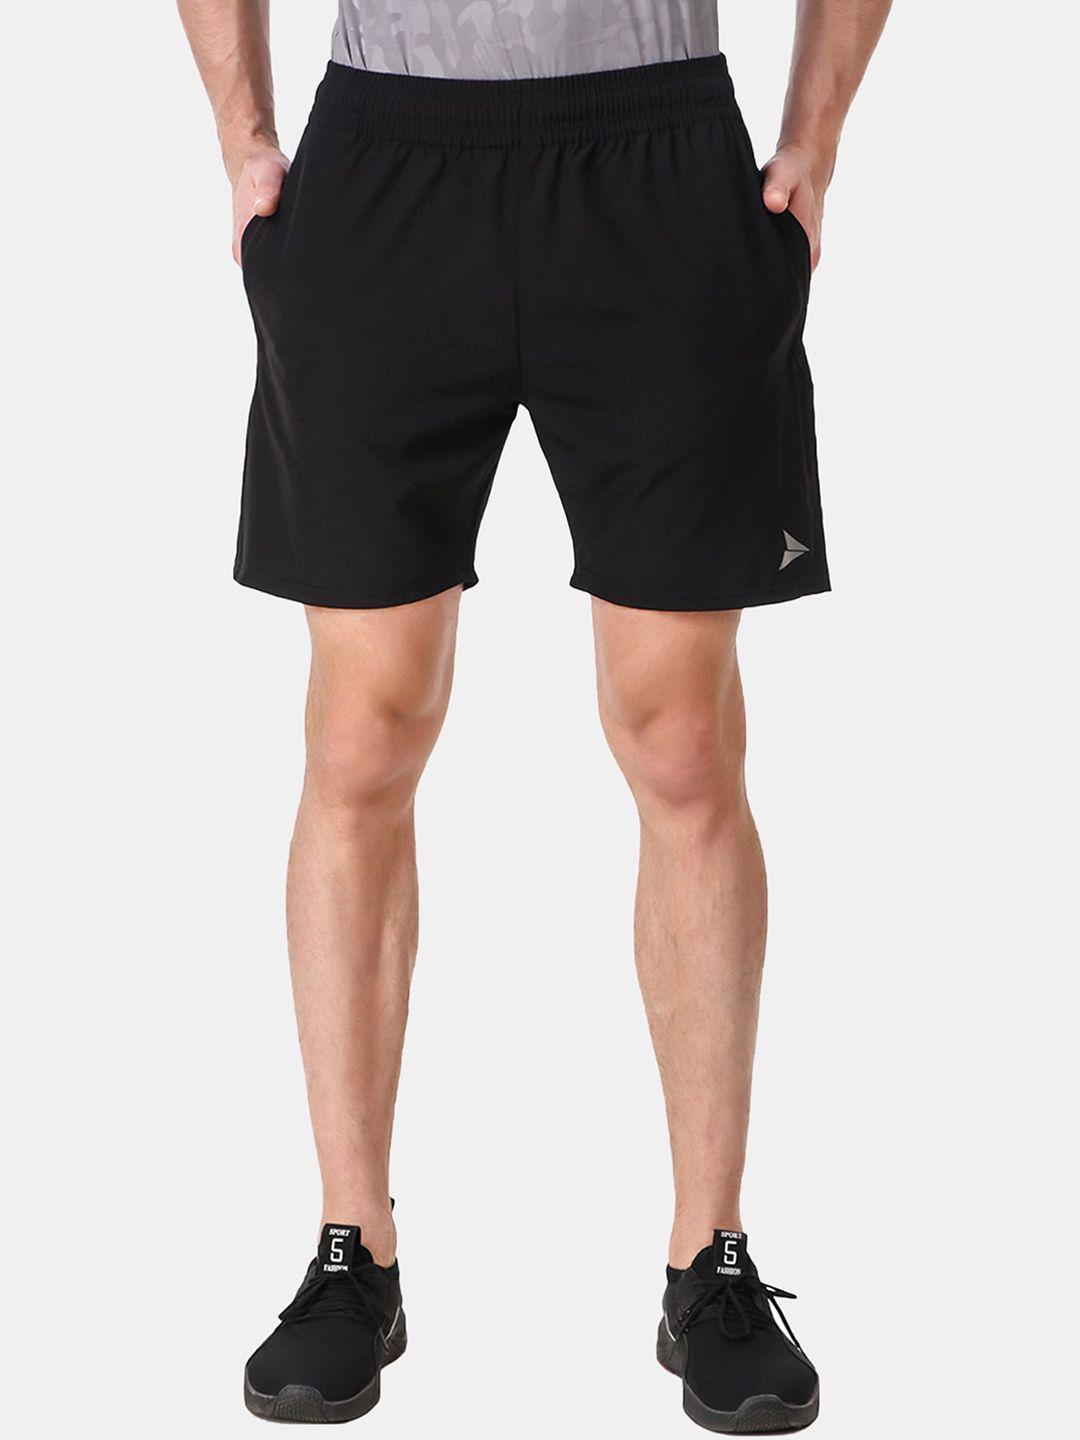 fitinc-men-black-slim-fit-rapid-dry-running-sports-shorts